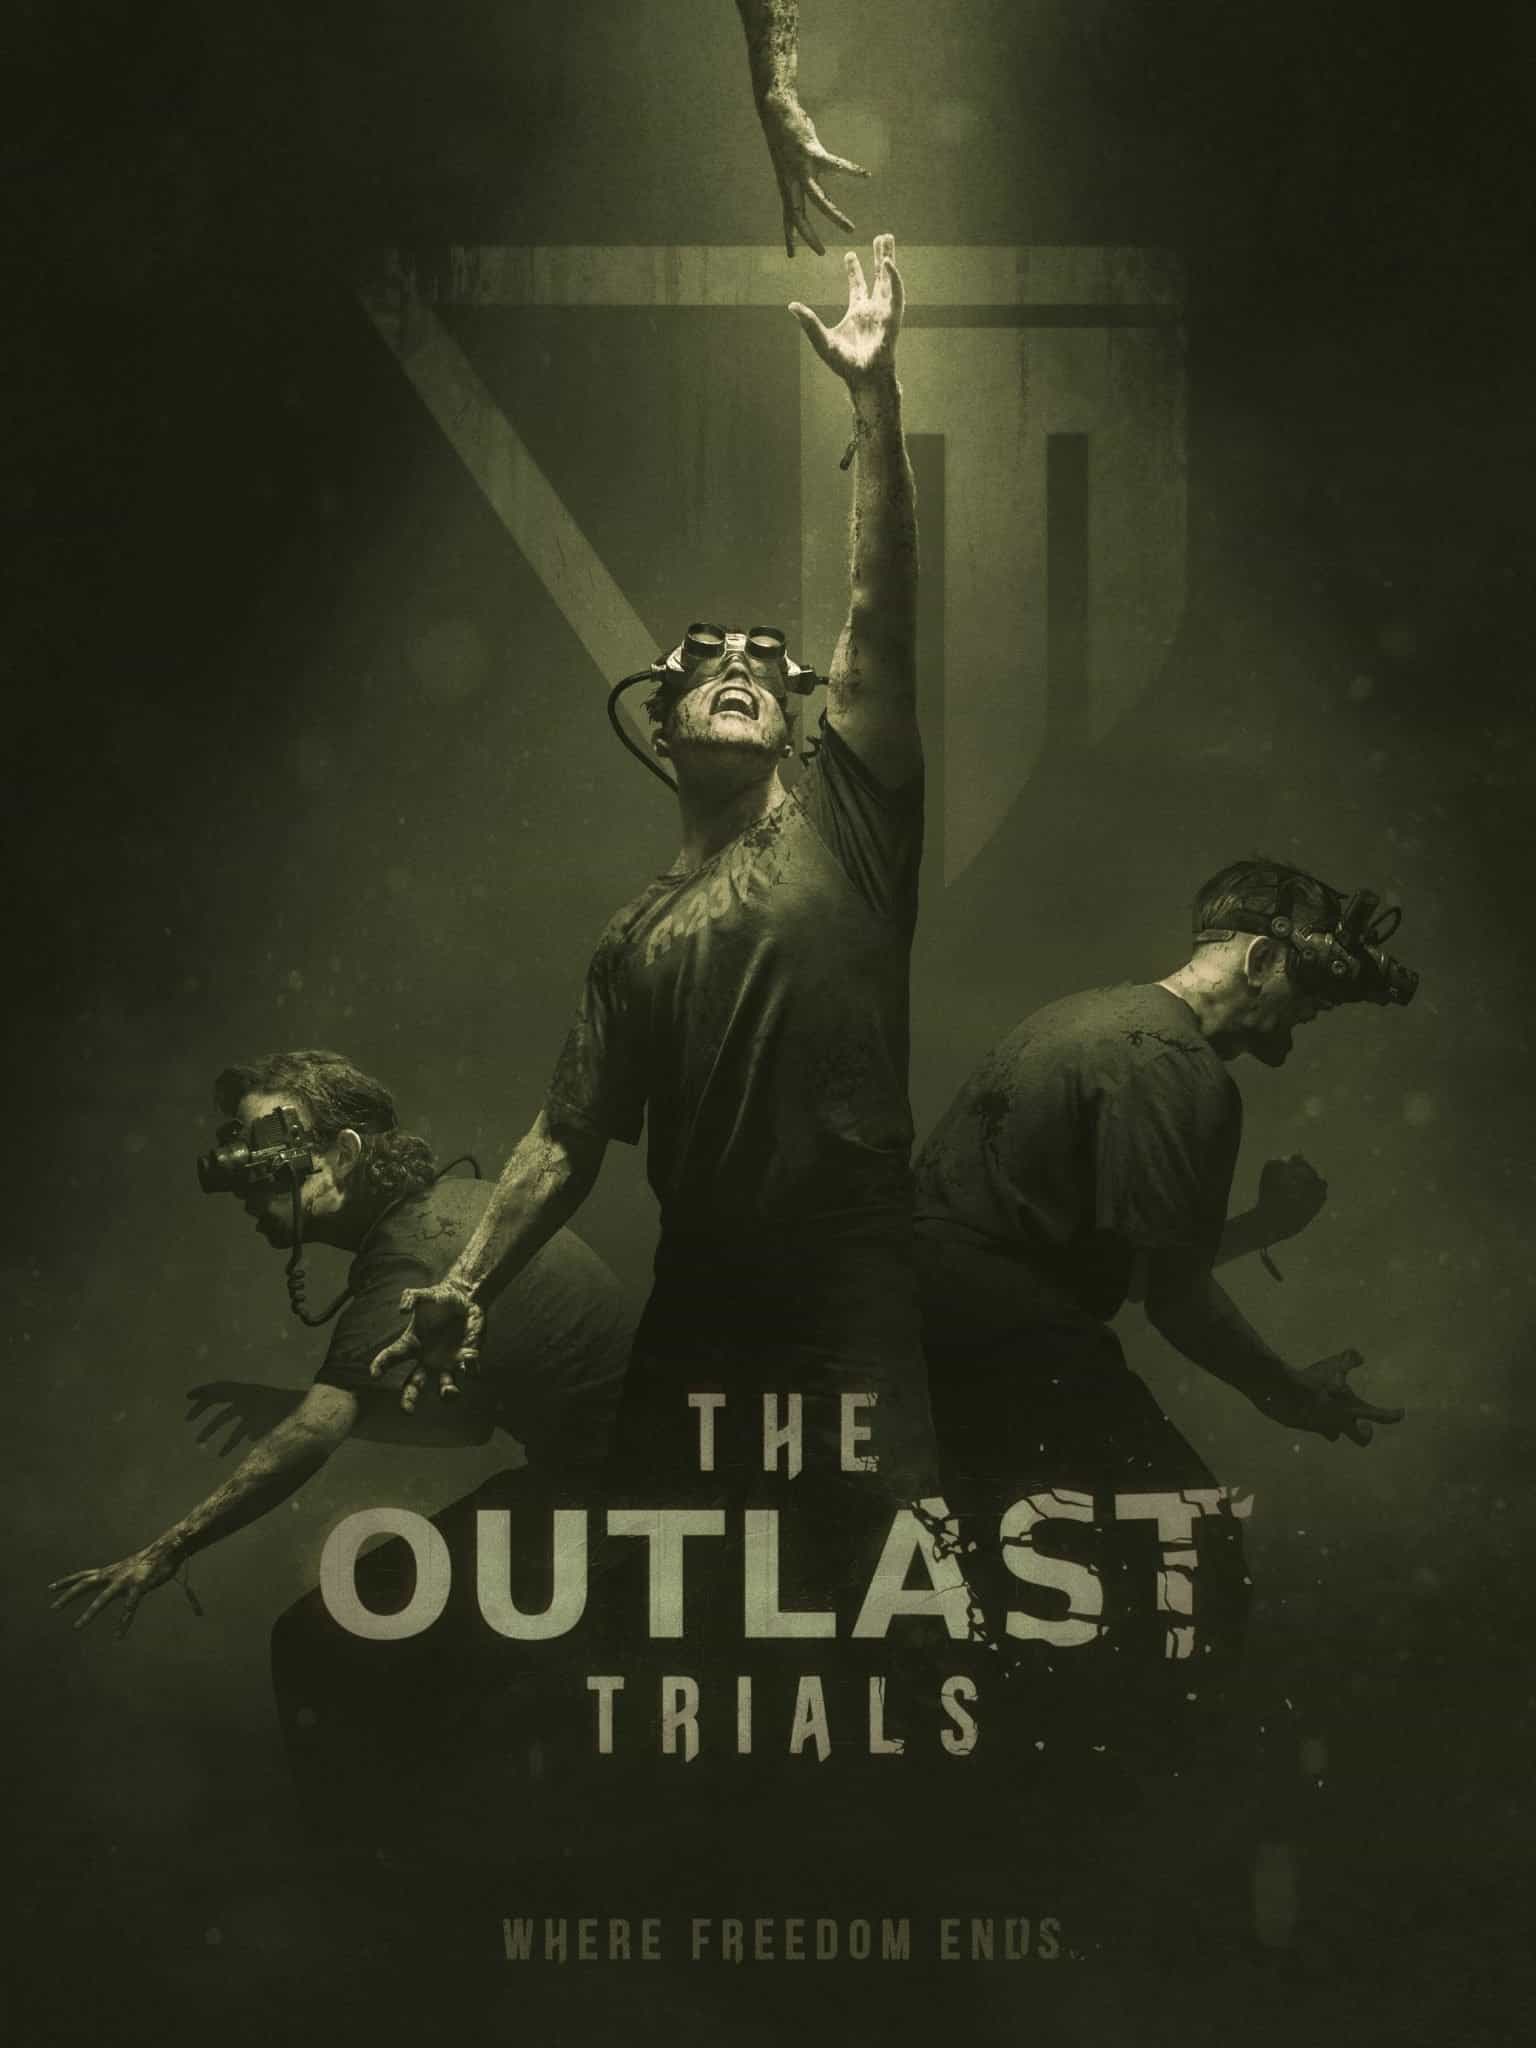 is the outlast trials cross platform